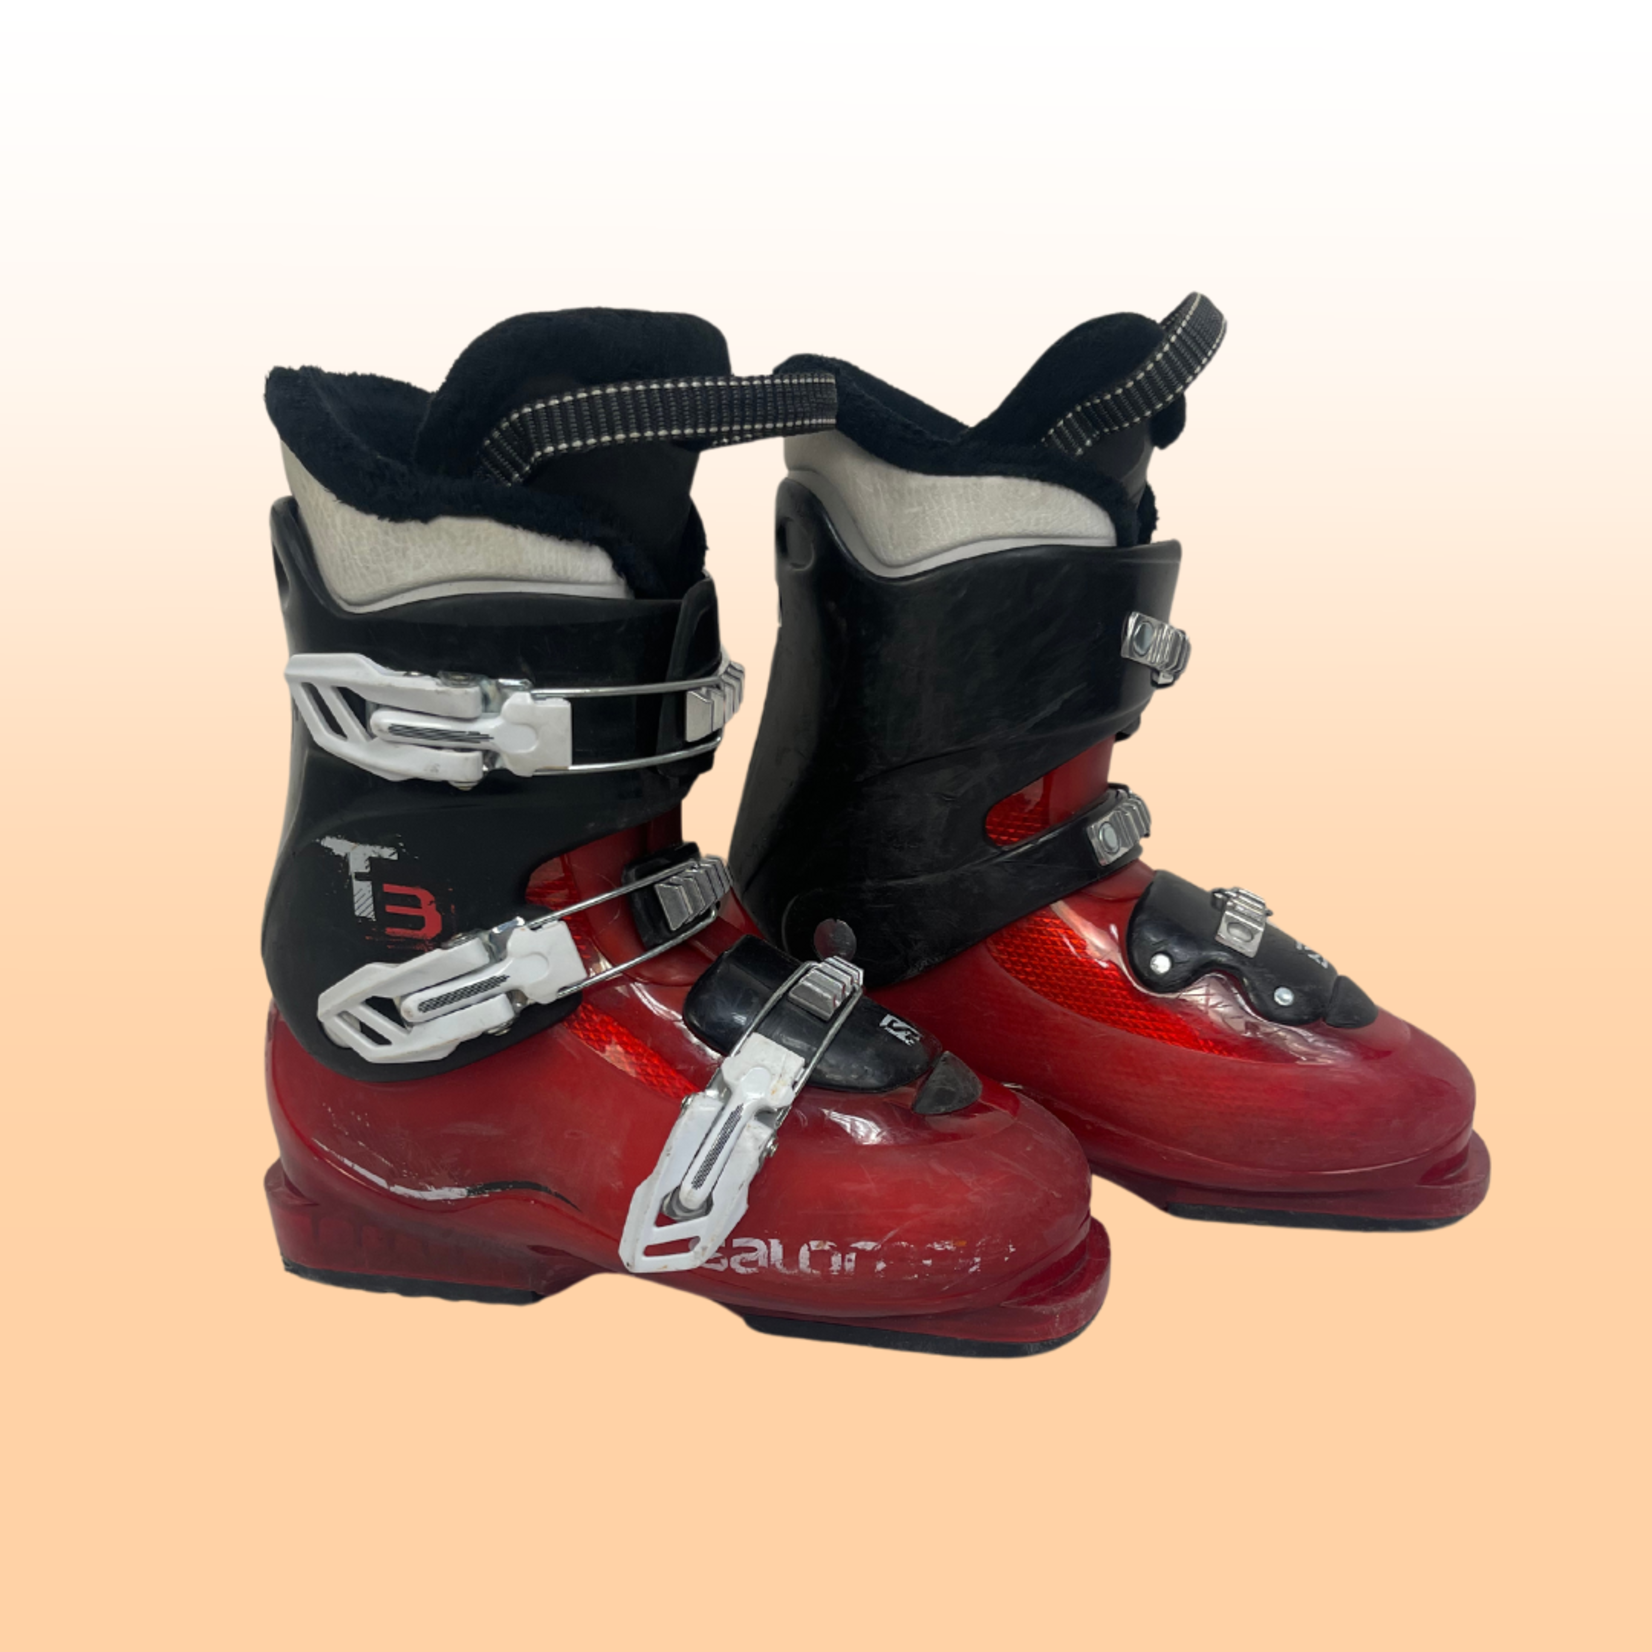 Salomon Salomon T3 Kids Ski Boots, Size 26.5